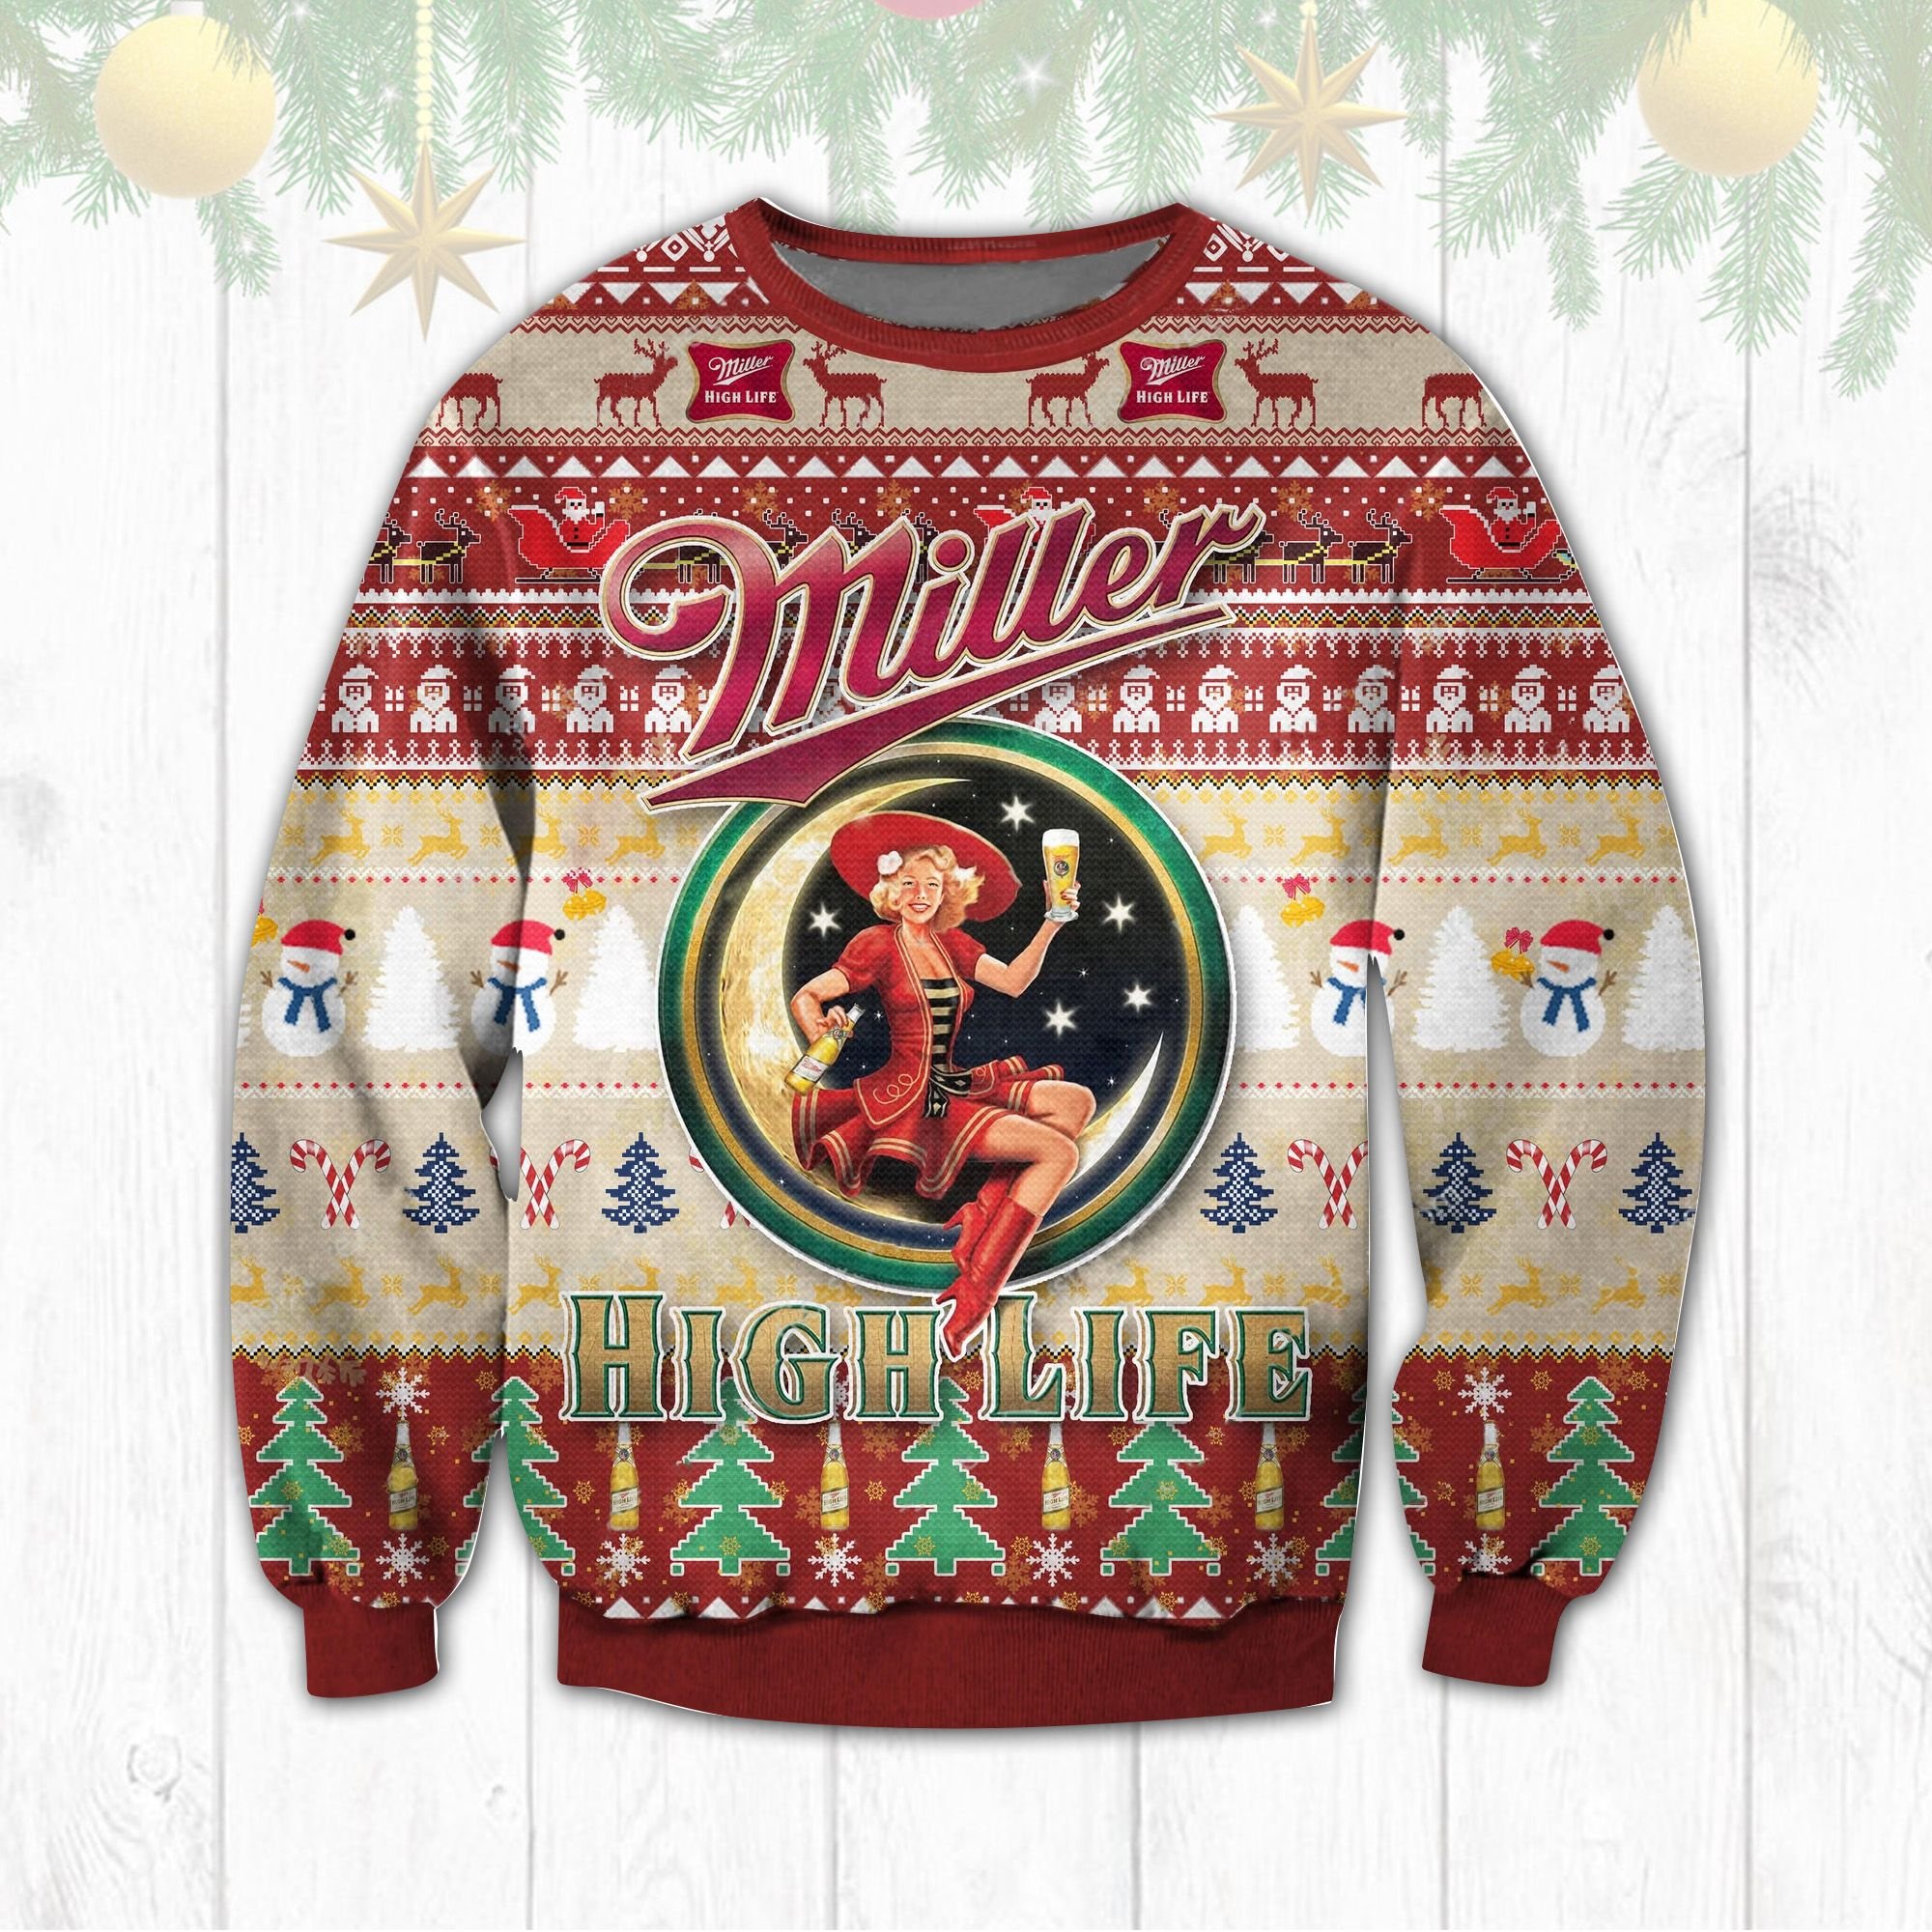 Miller High Life Beer Sweater Christmas